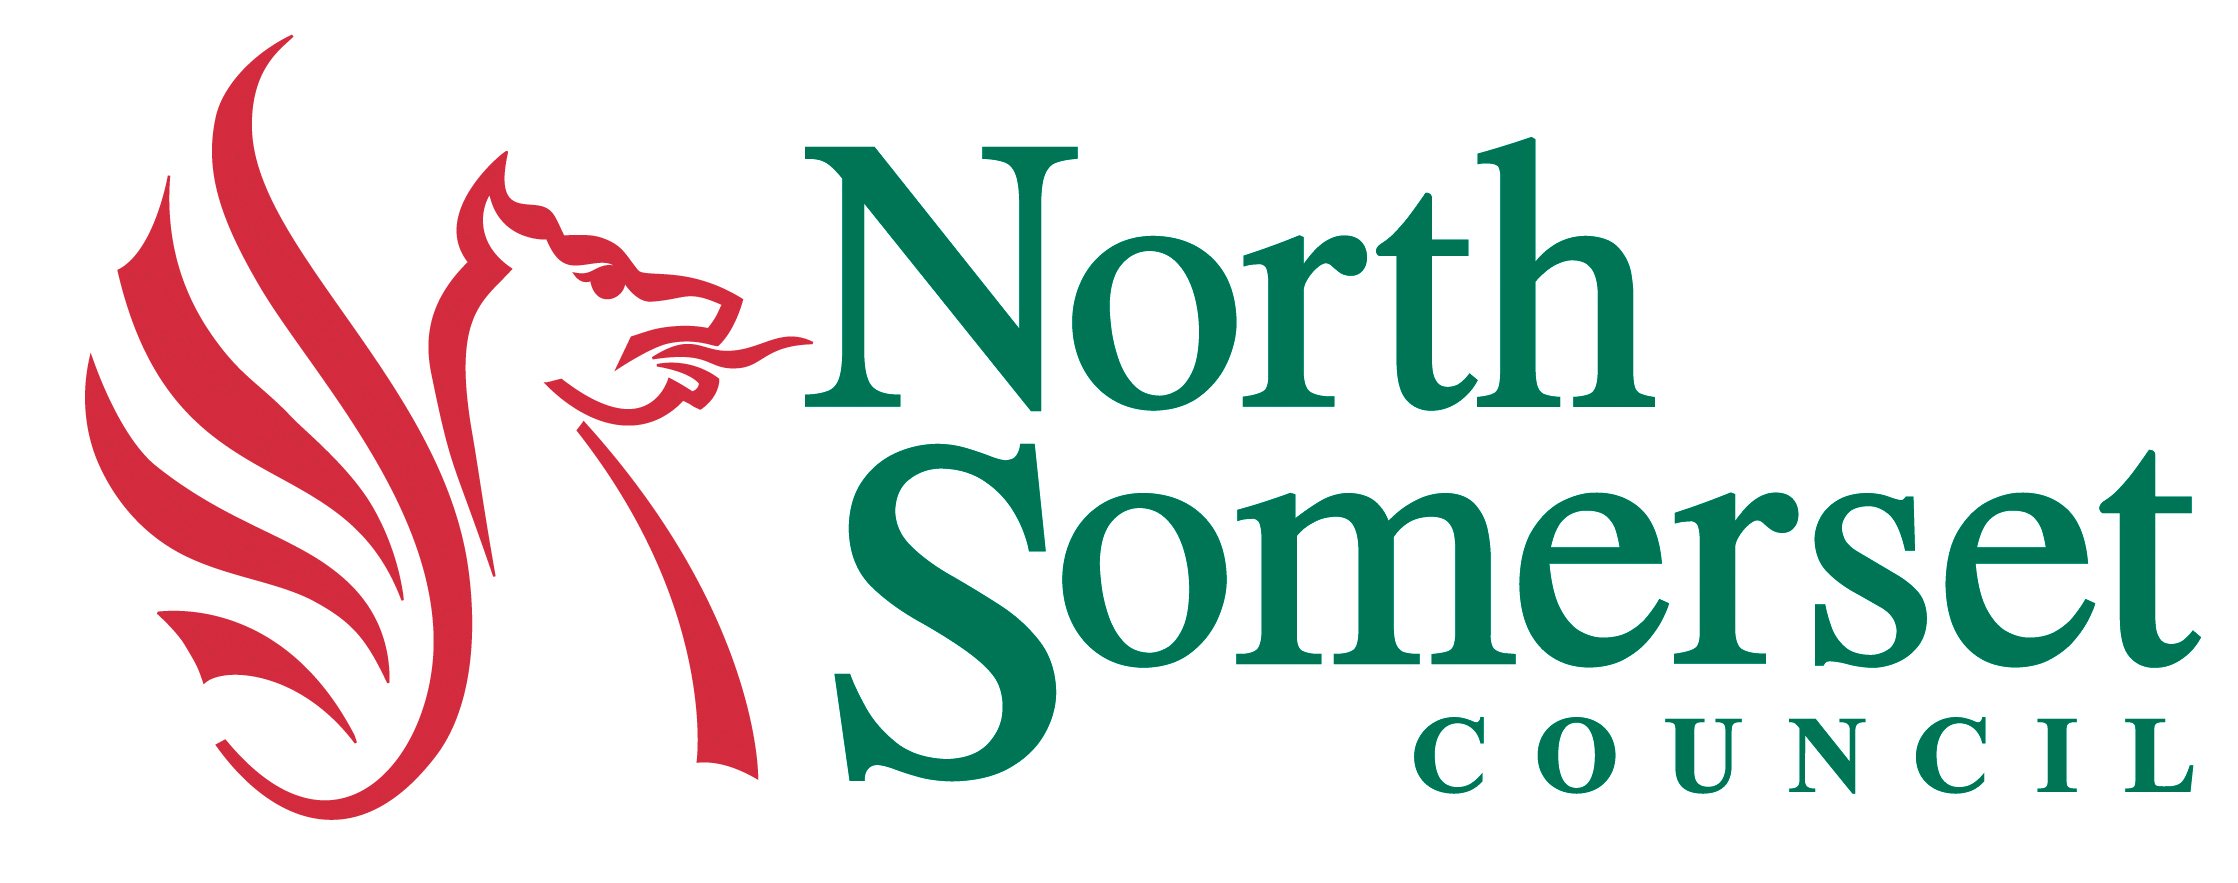 North Somerset council logo